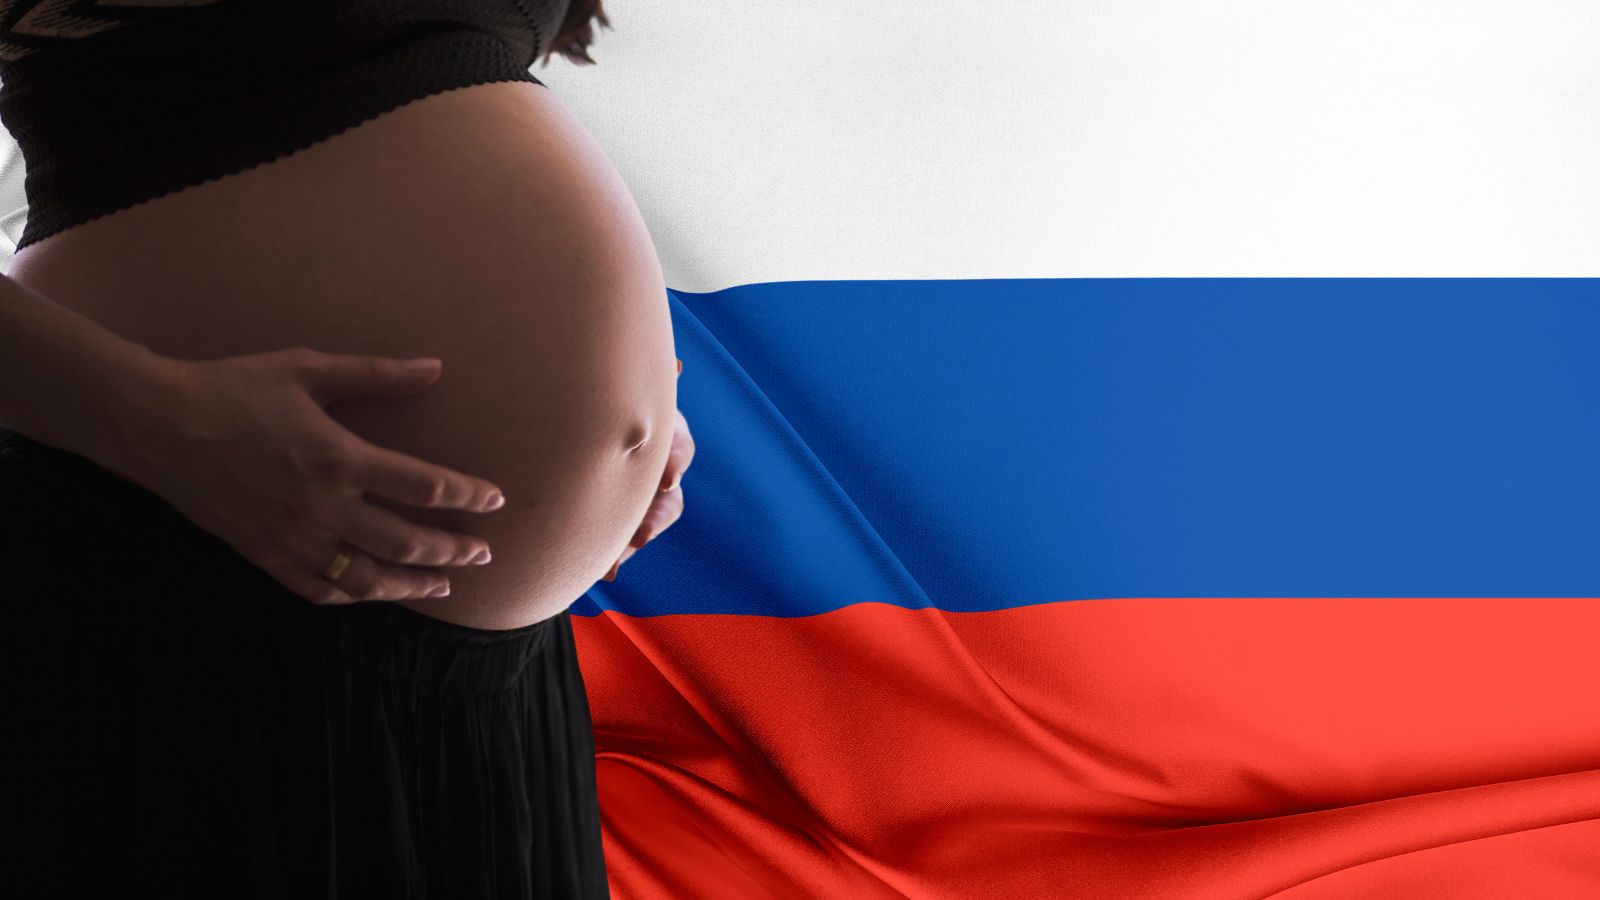 Pregnant Russian Women Seeking Argentinian Citizenship Our News